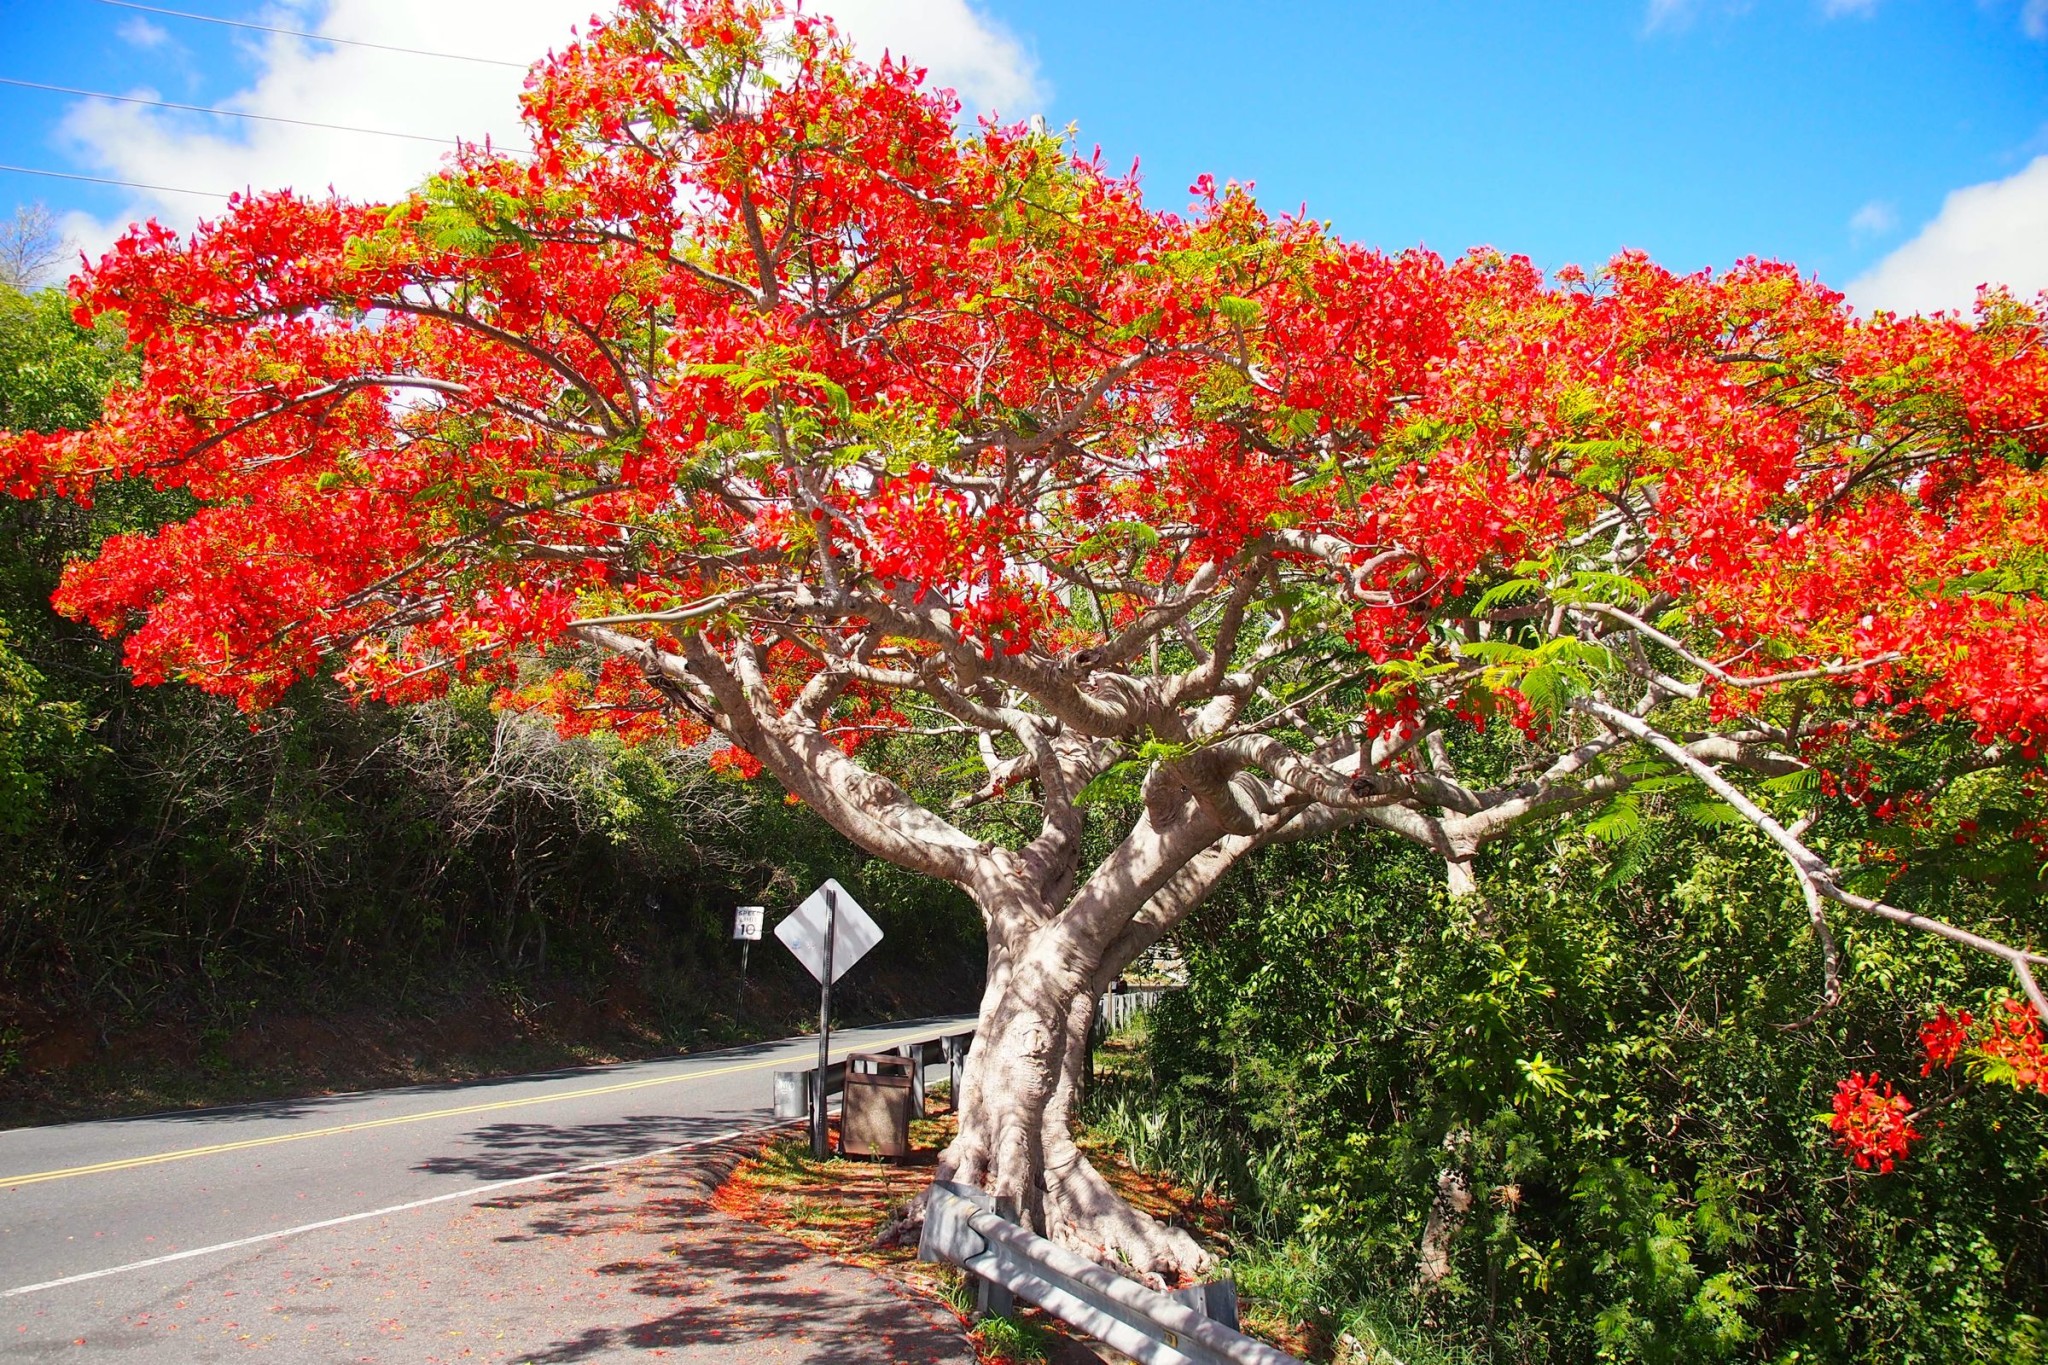 Le Flamboyant, So Much More Than a Plain Old Tree | Caribbean |